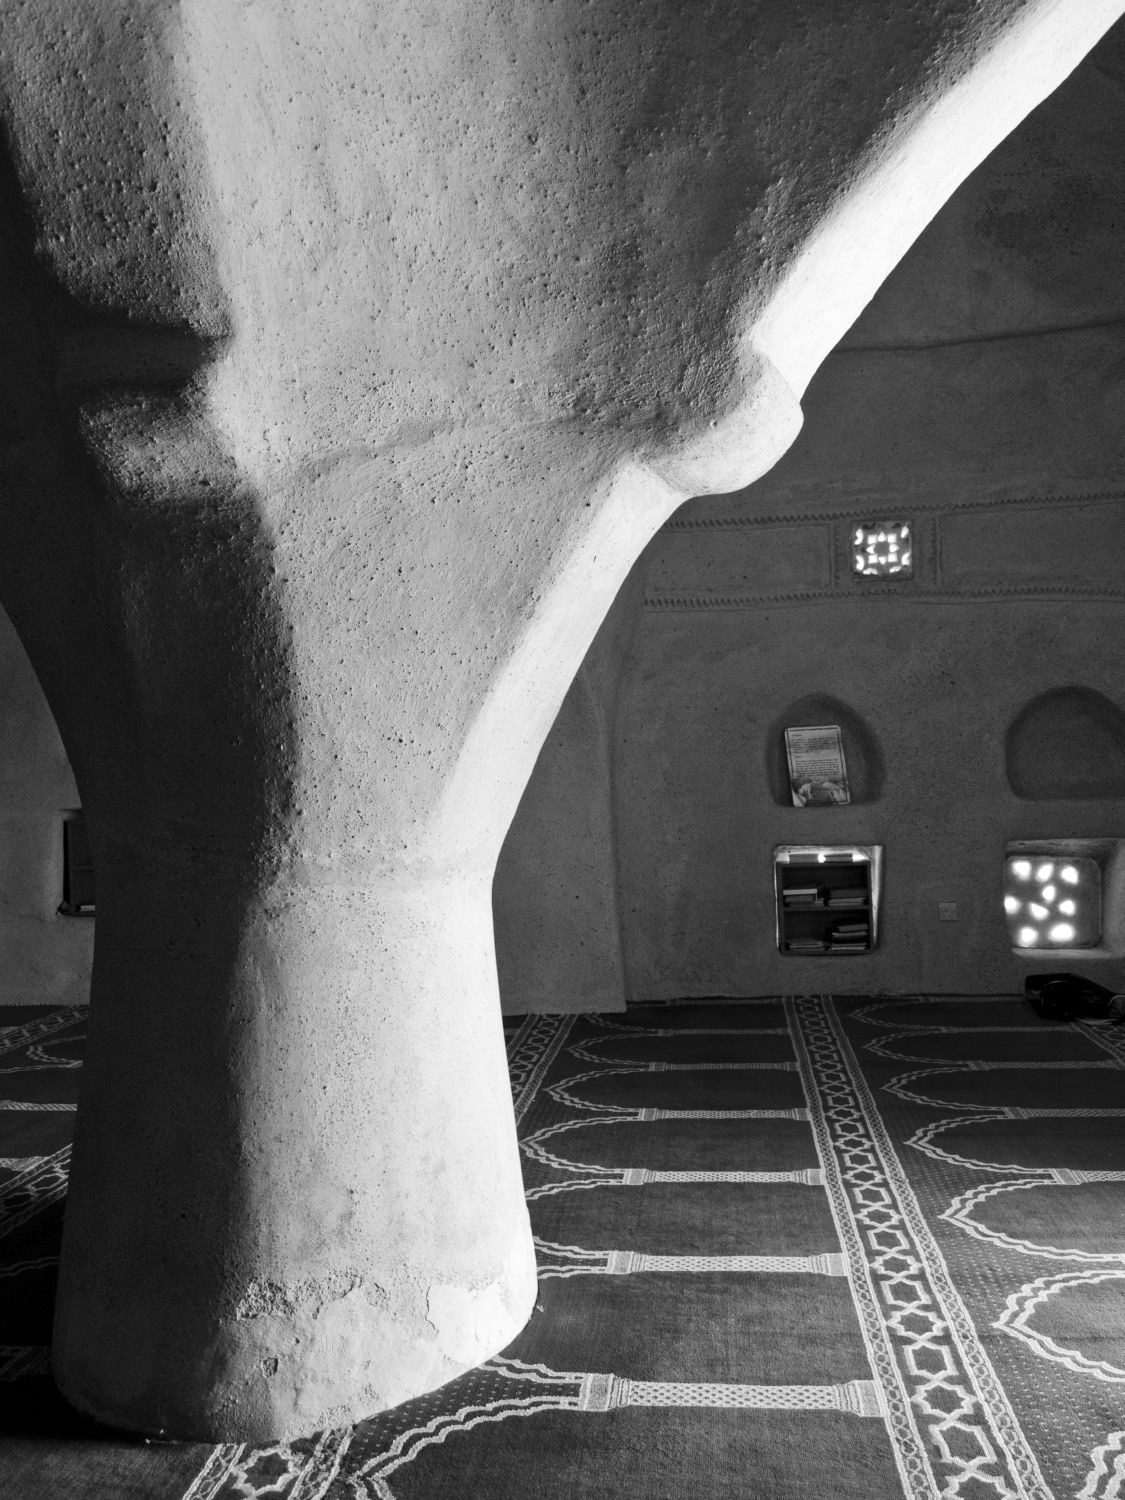 Jami' al-Bidiya - Detail of central column facing internal north elevation